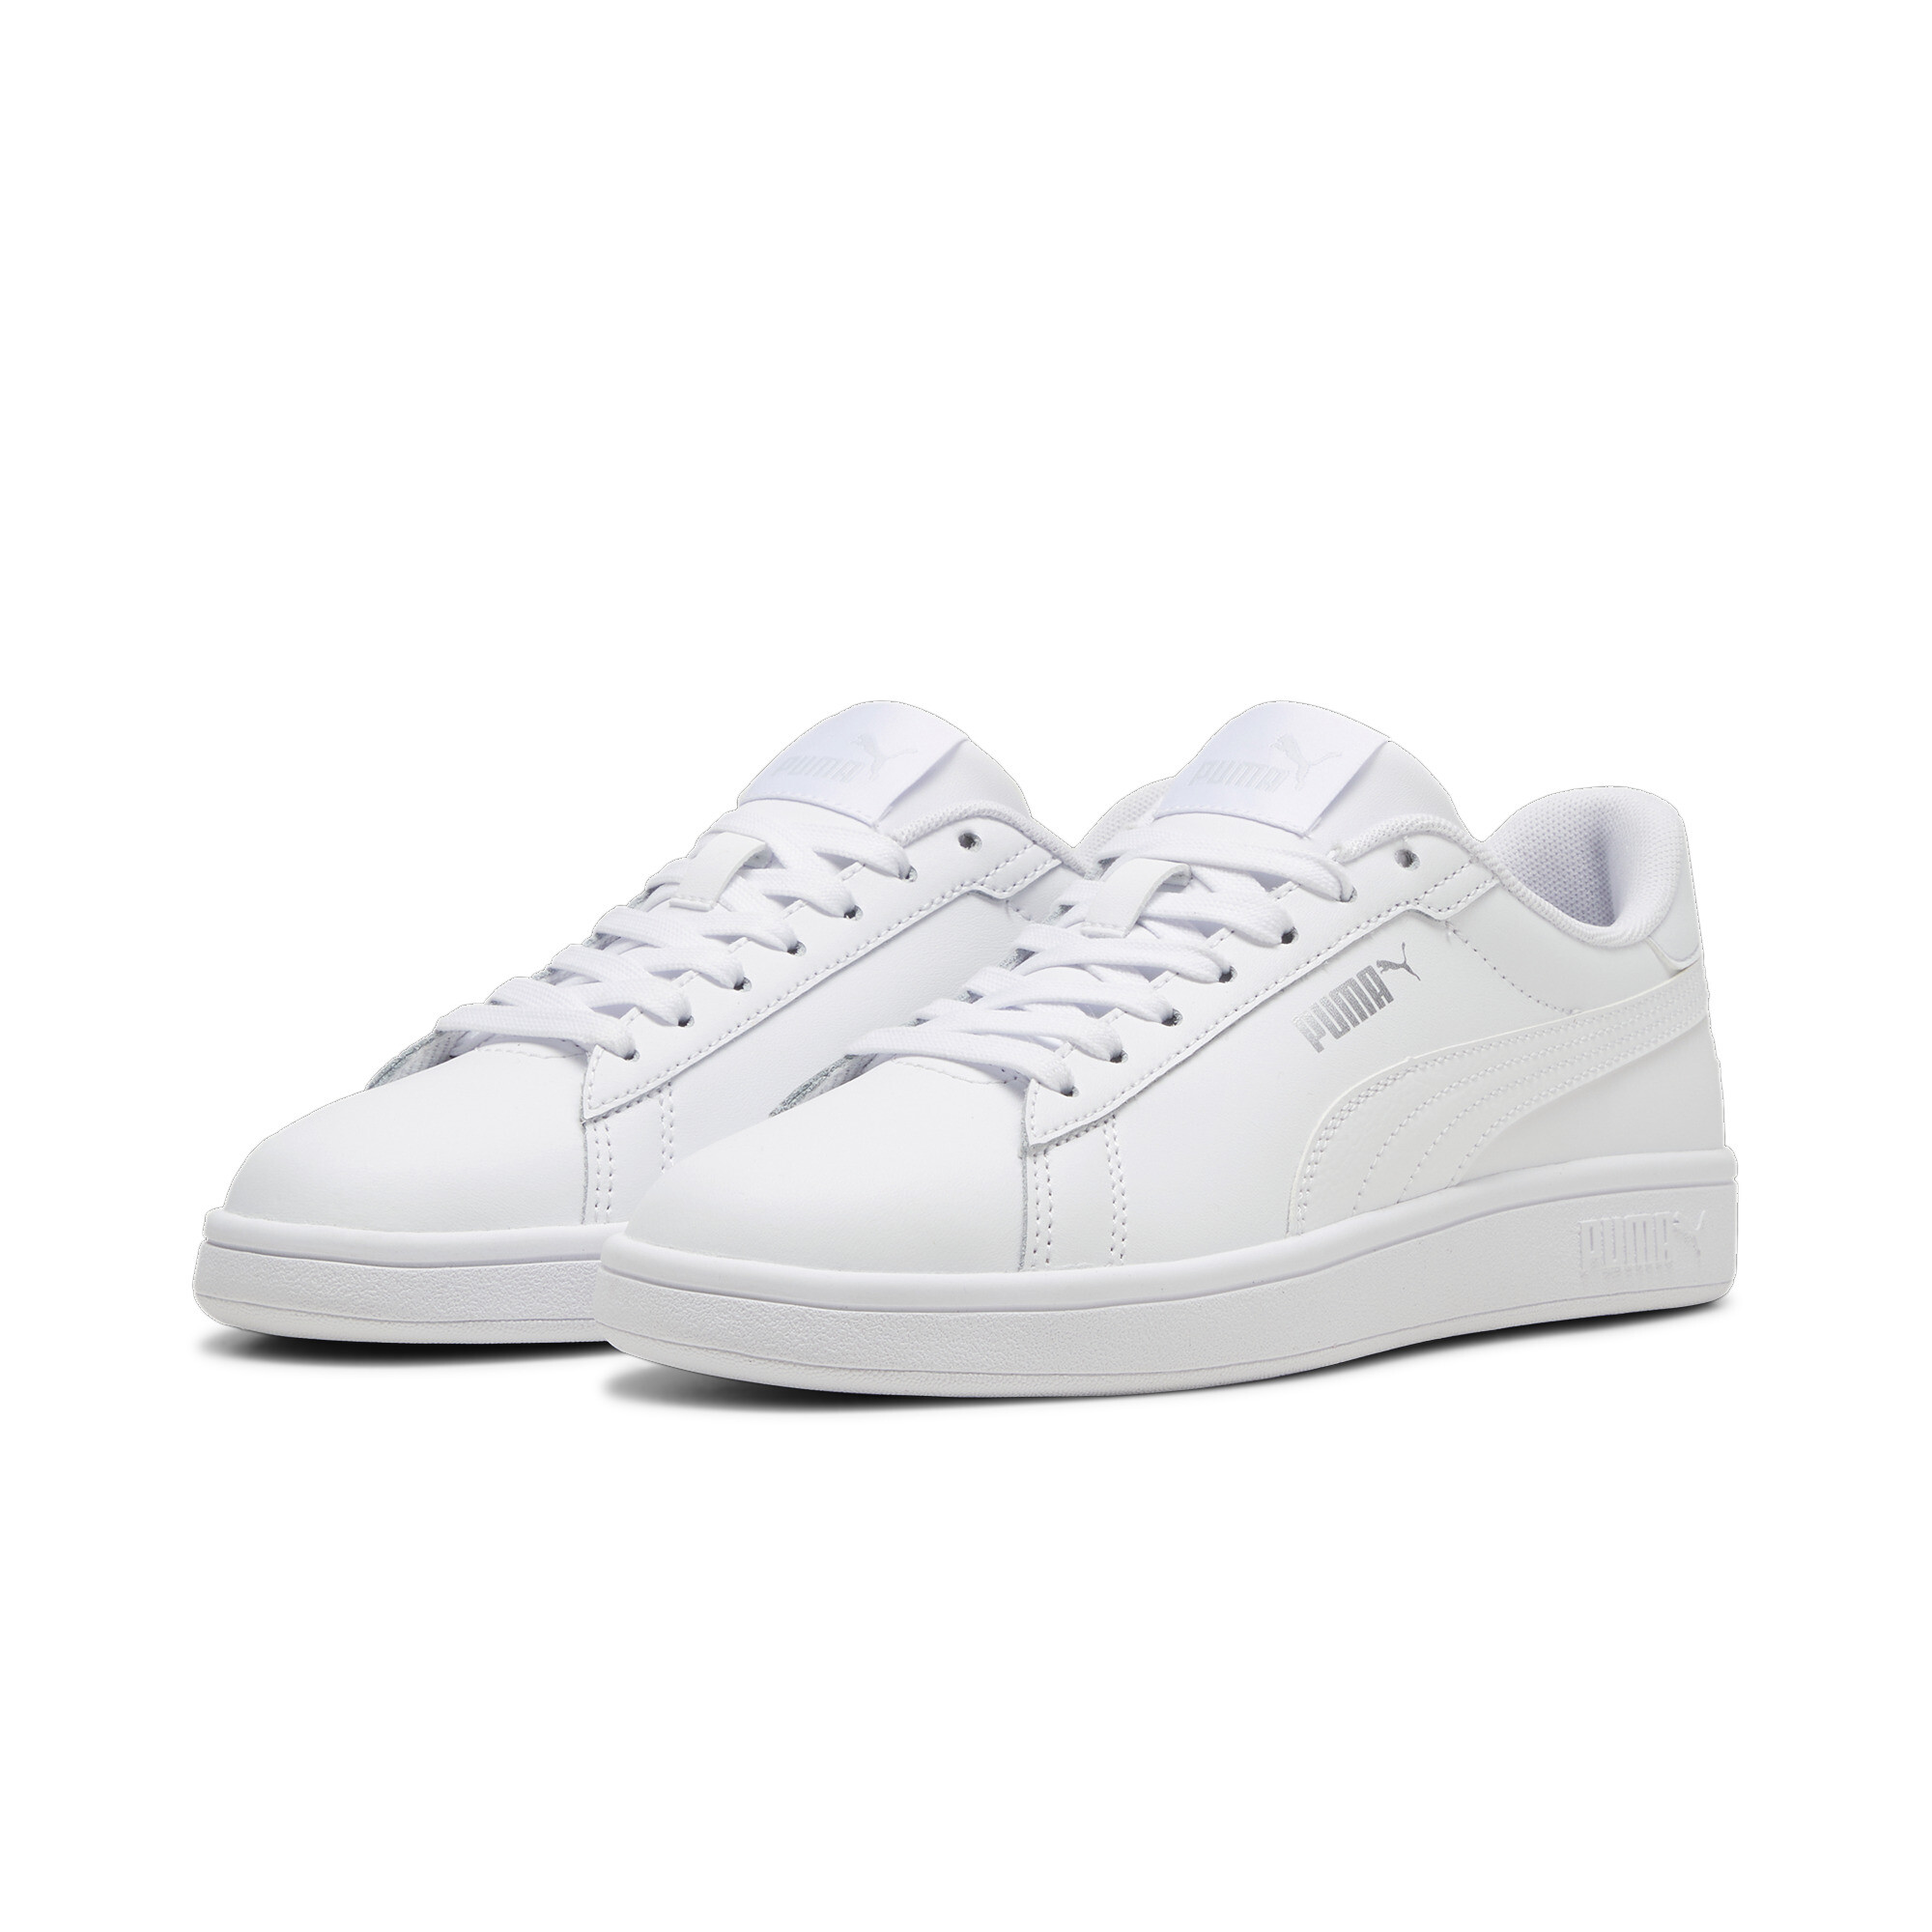 Puma Smash 3.0 L Sneakers, White, Size 35.5, Shoes